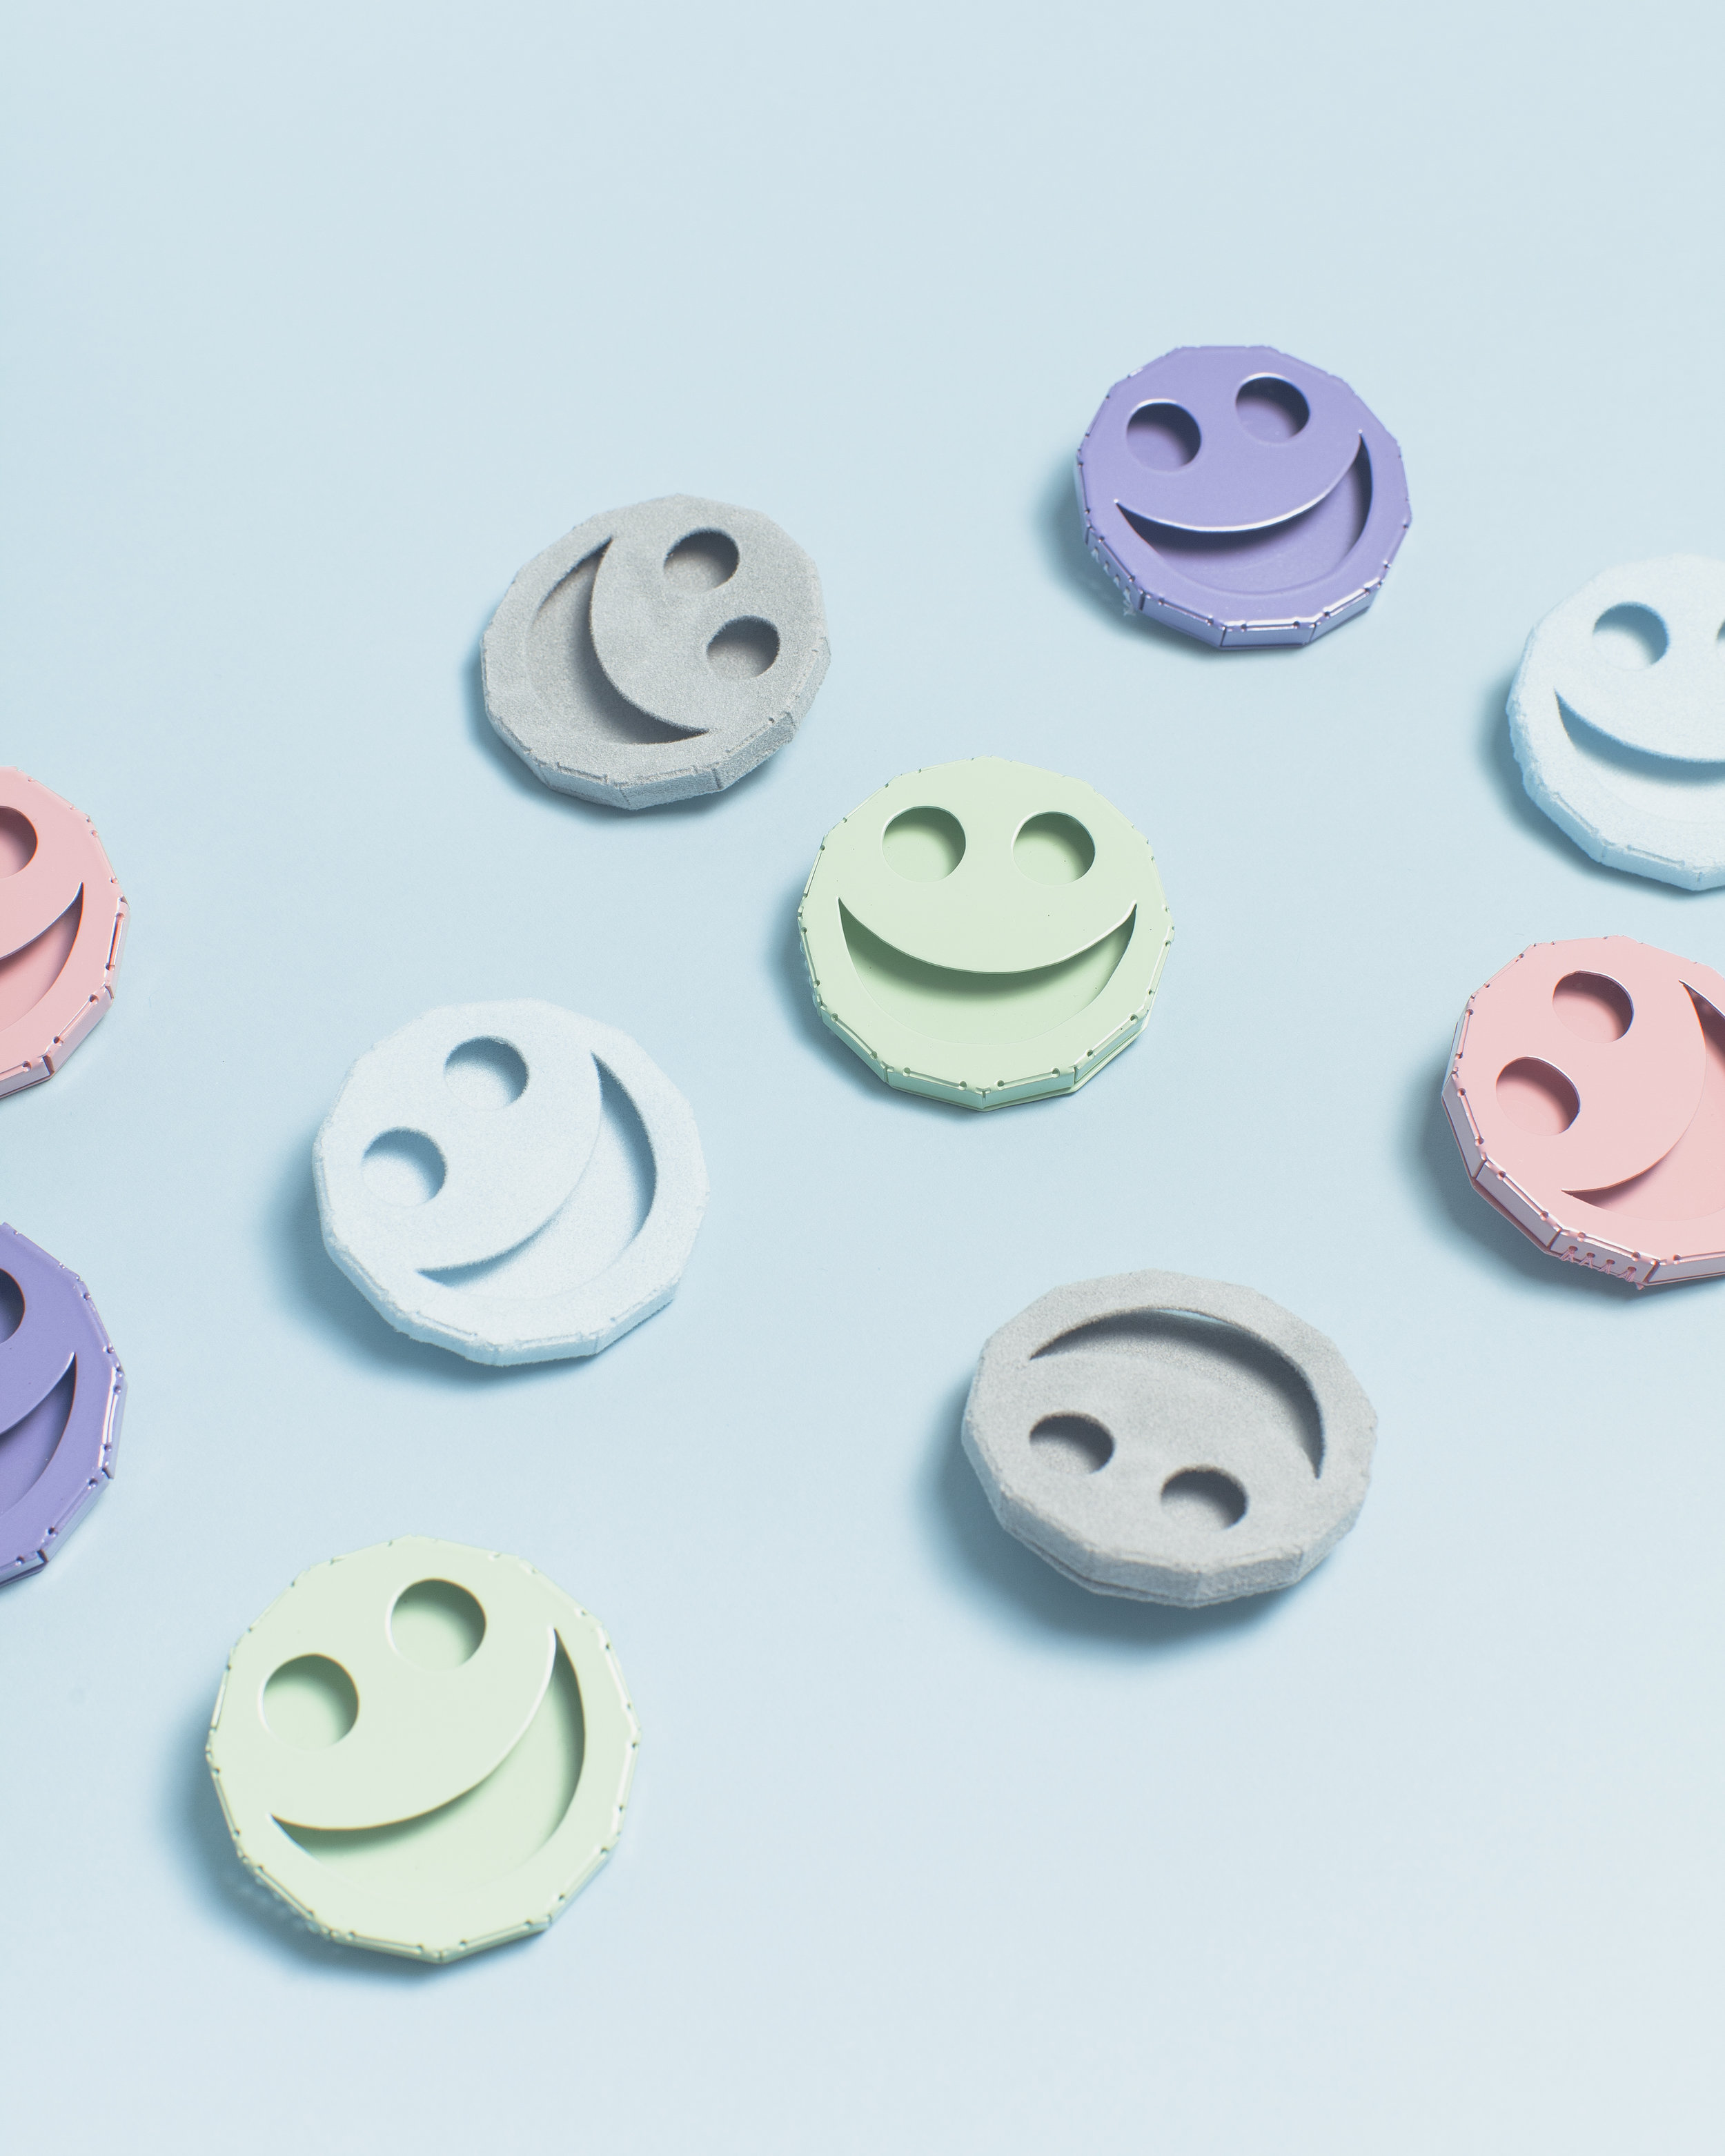   Fuzzy Smile Symbol Pins   Brass, Nickel, Paint, Flocking  2”x2”x.5”  (Baby Blue, Light Grey)     Smile Symbol Pins   Powder-Coated Brass, Nickel  2”x2”x.5”  (Mint Green, Pastel Purple, Pastel Pink)    Photo by Harry Gould Harvey 